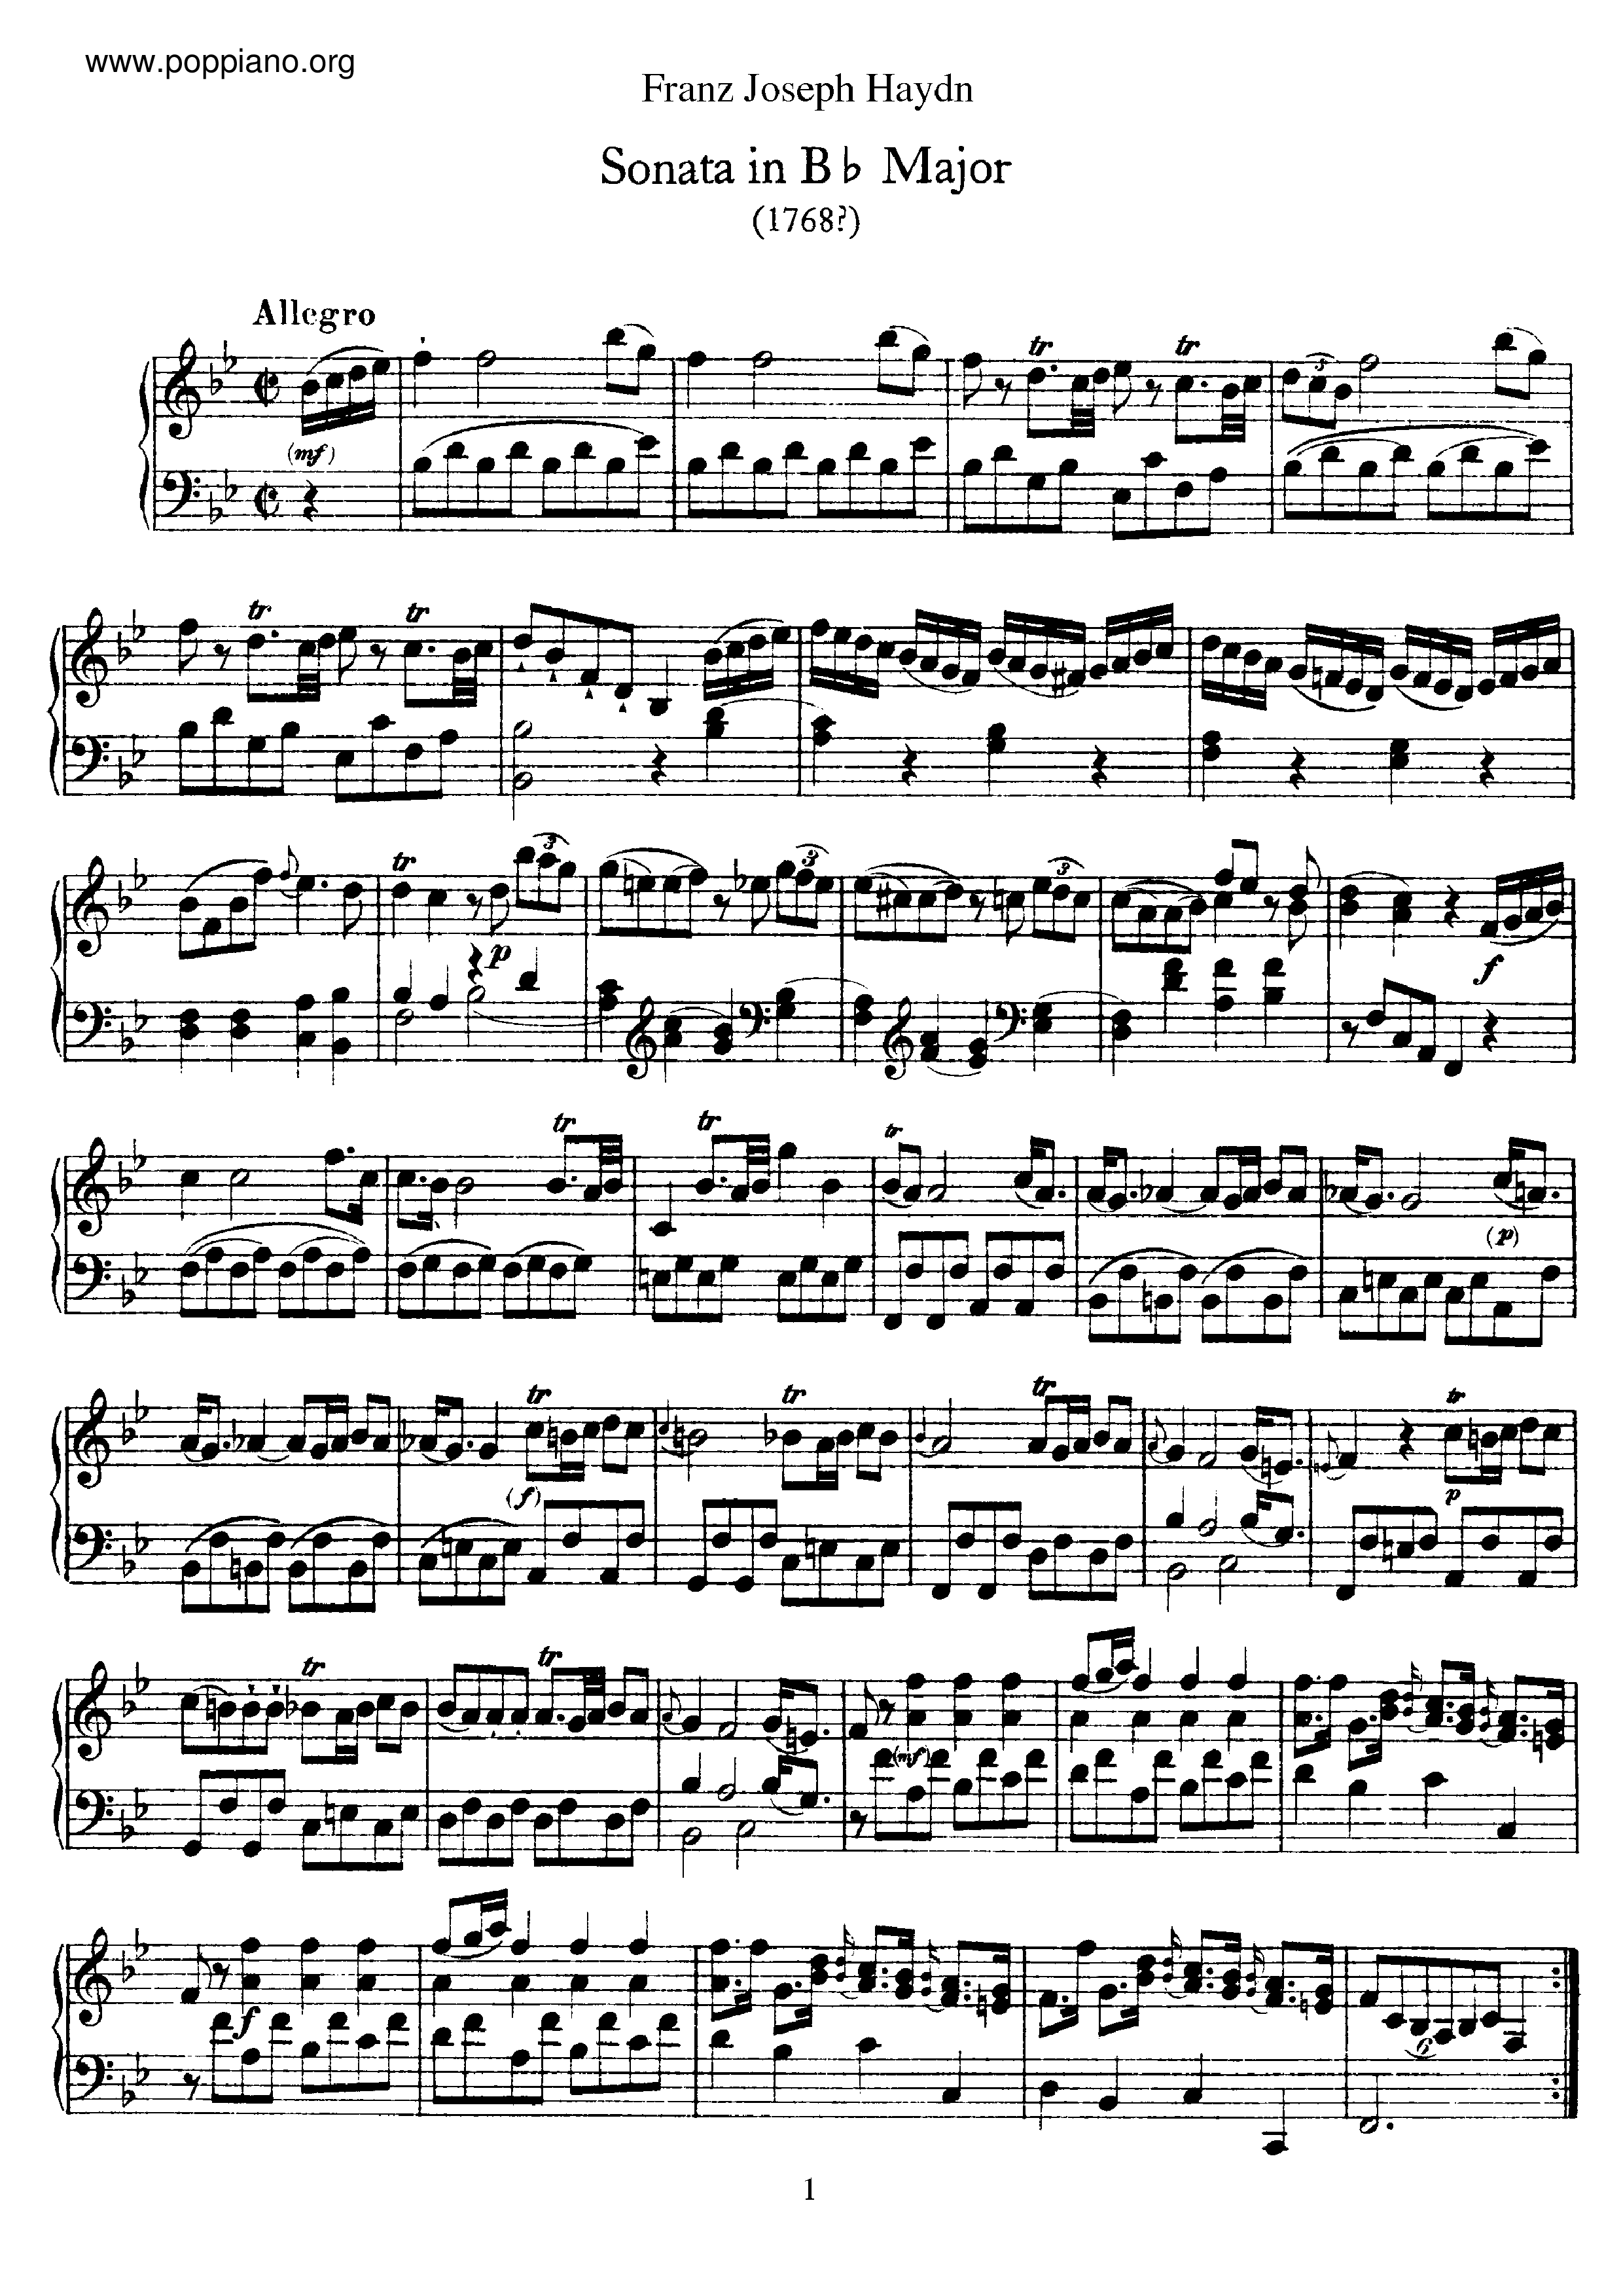 Sonata No.17 in B flat major琴谱